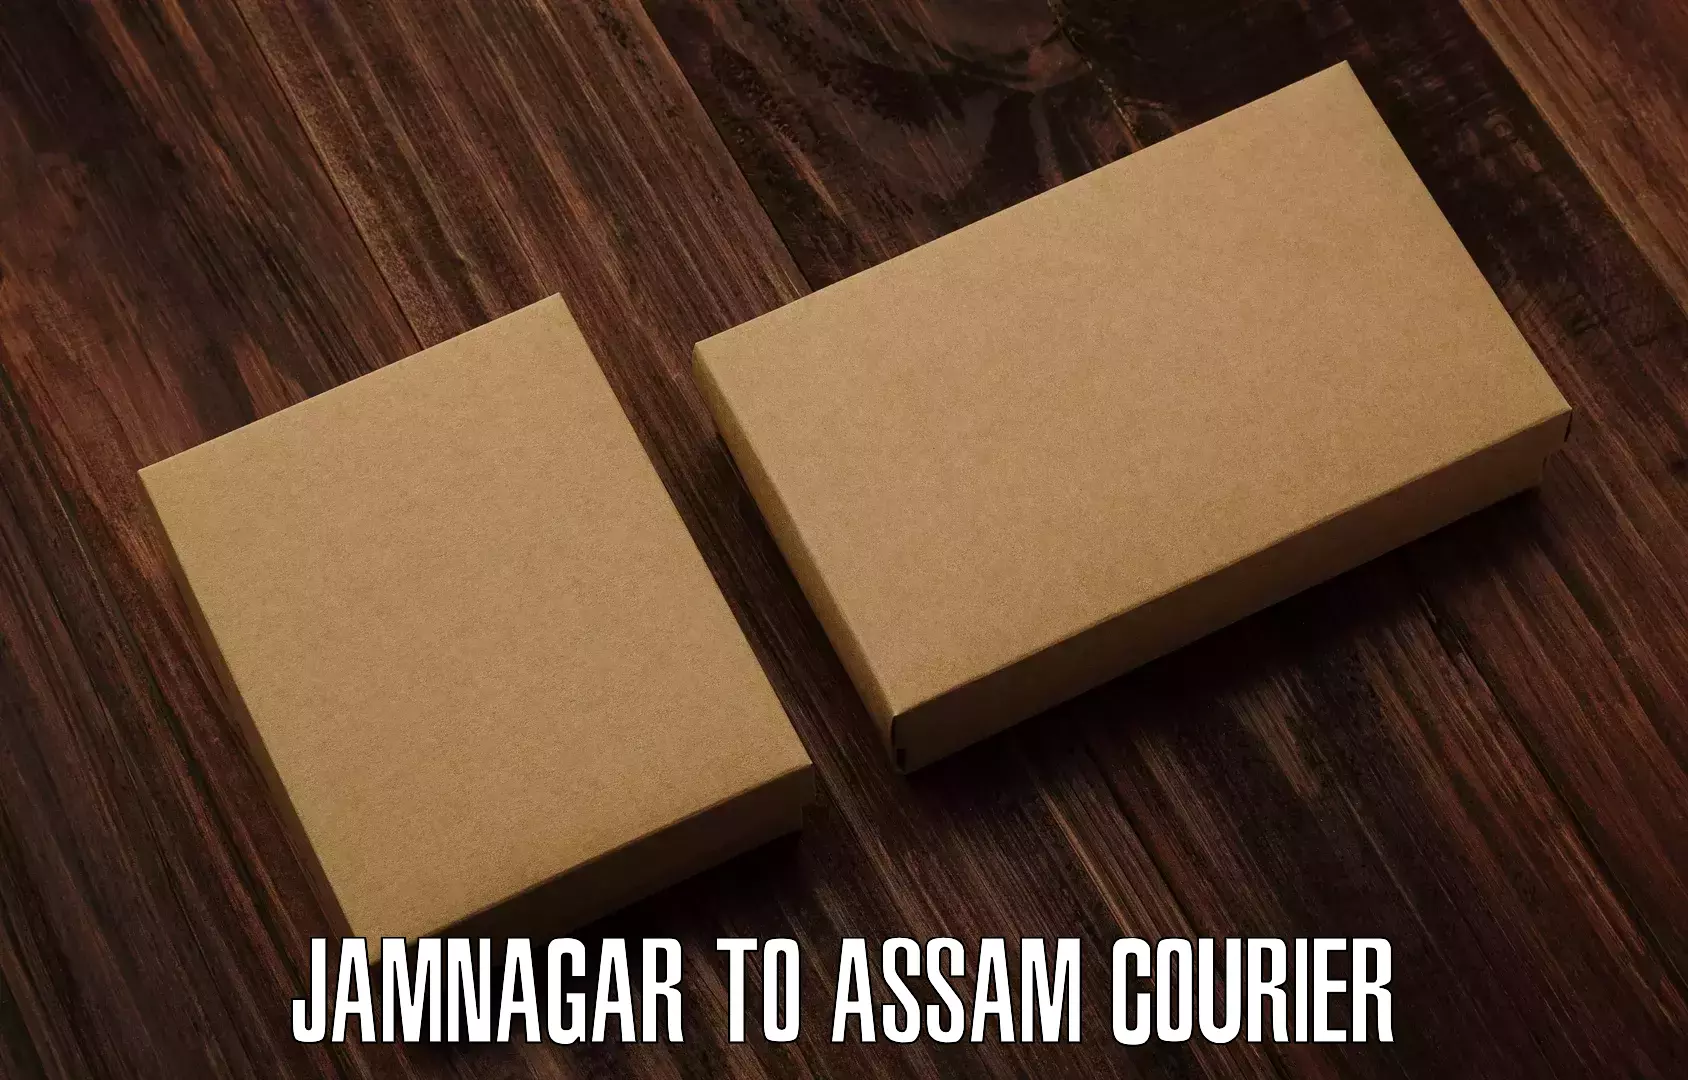 On-demand courier Jamnagar to Guwahati University